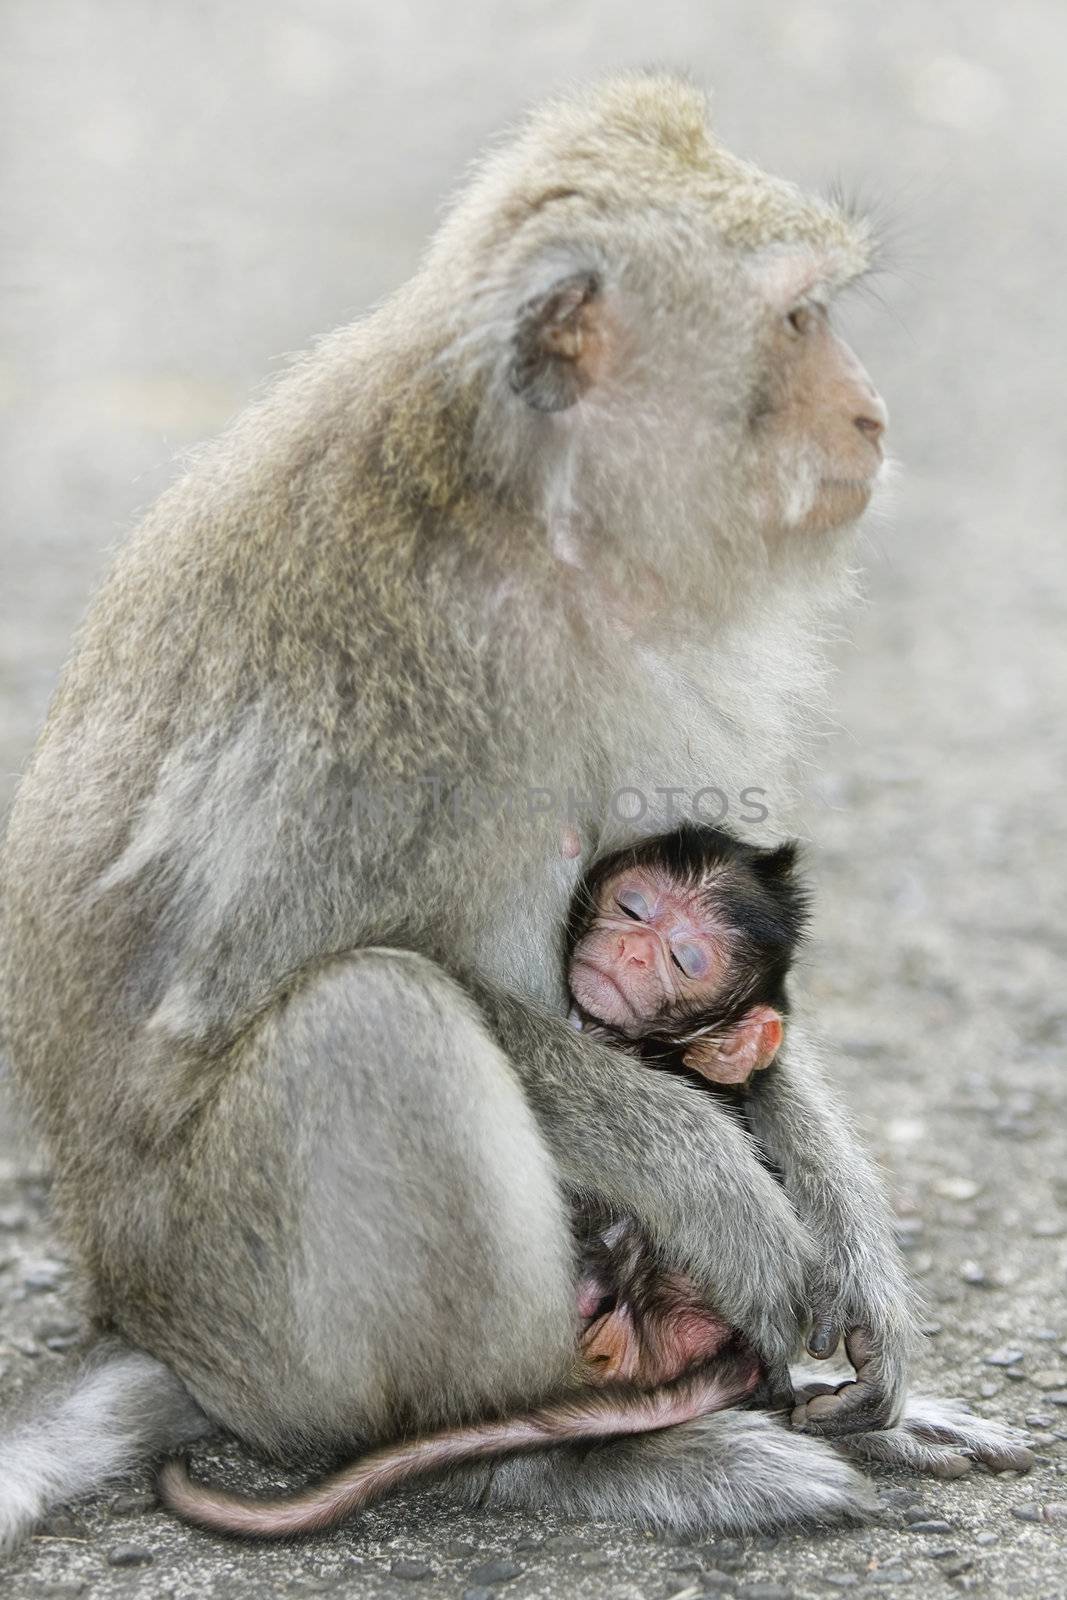 A newborn macaque monkey in Bali, Indonesia